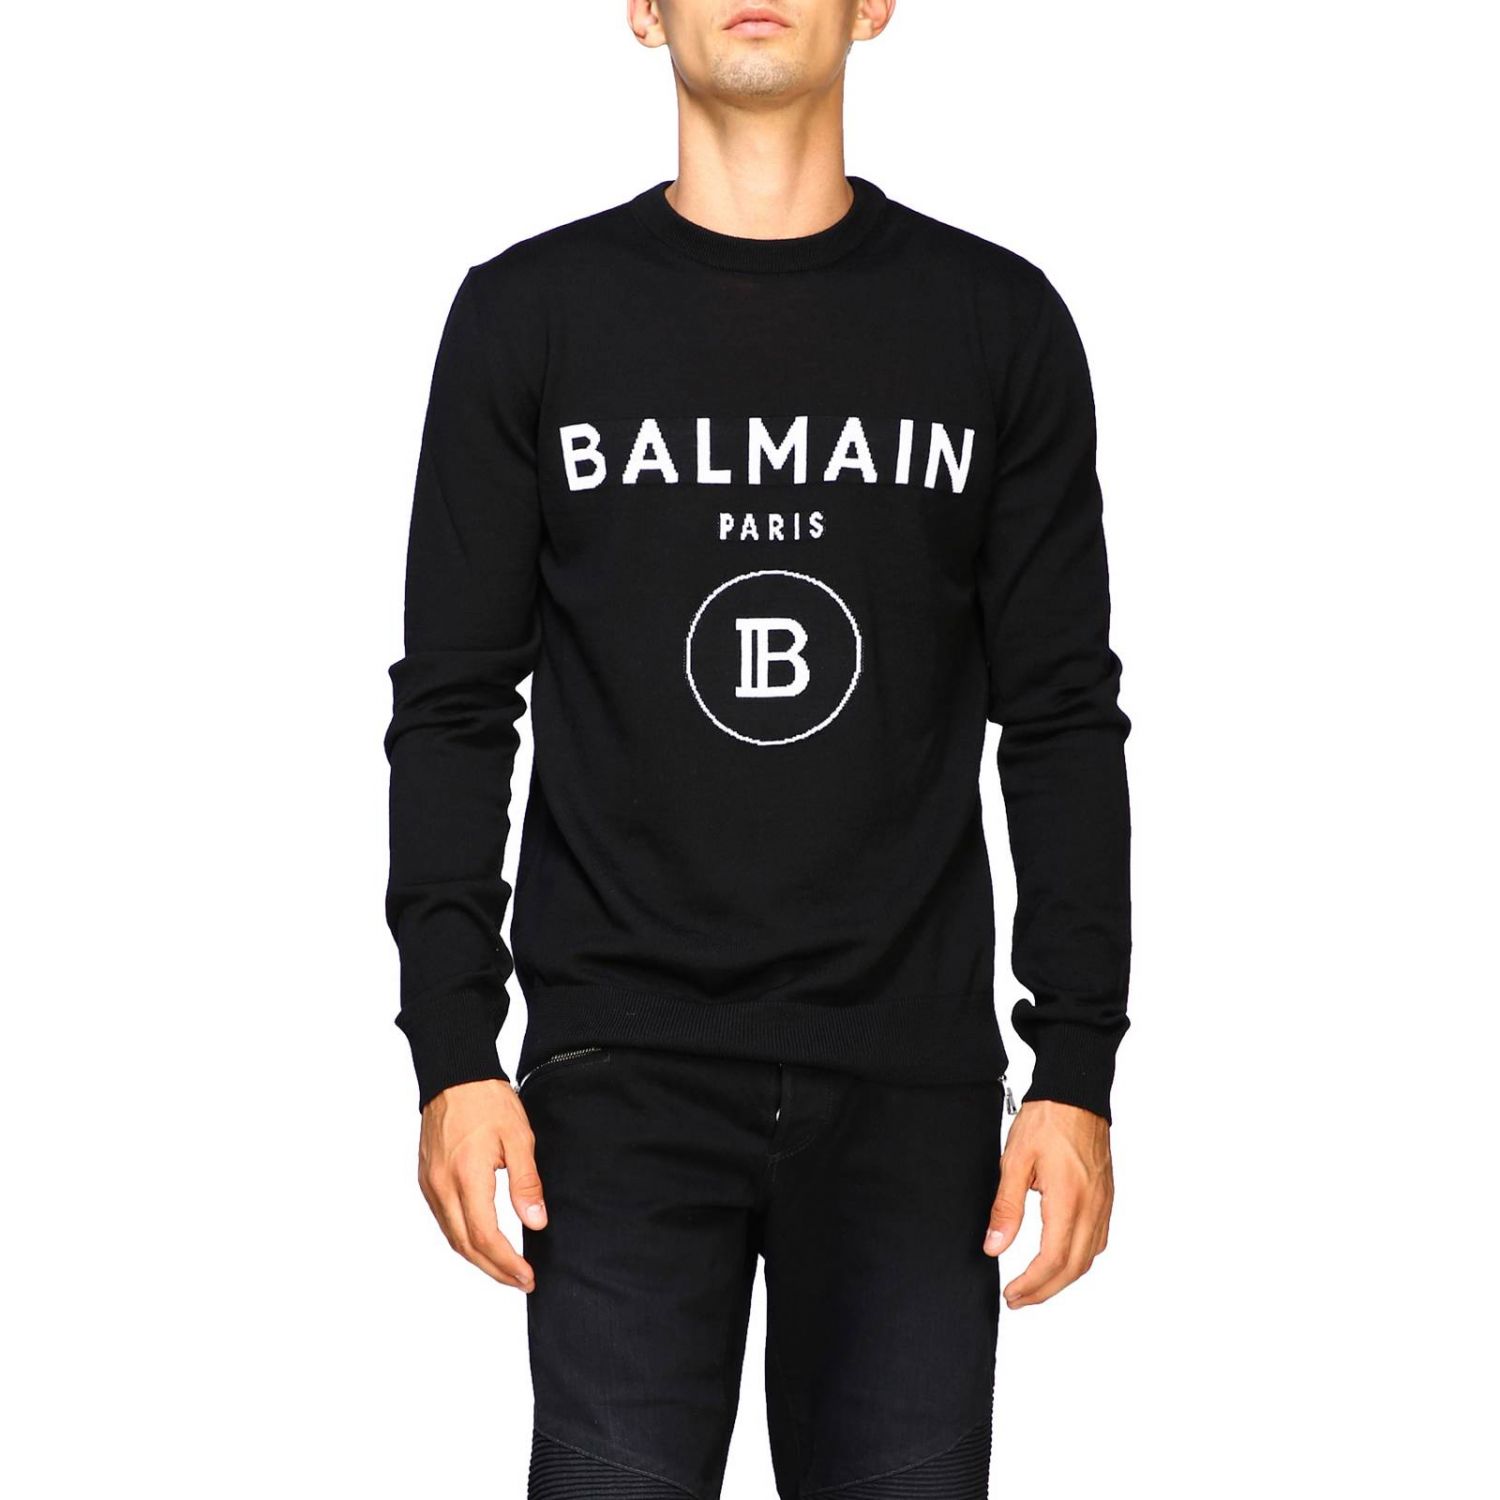 Balmain Outlet: crewneck jumper with logo - Black | Balmain jumper ...